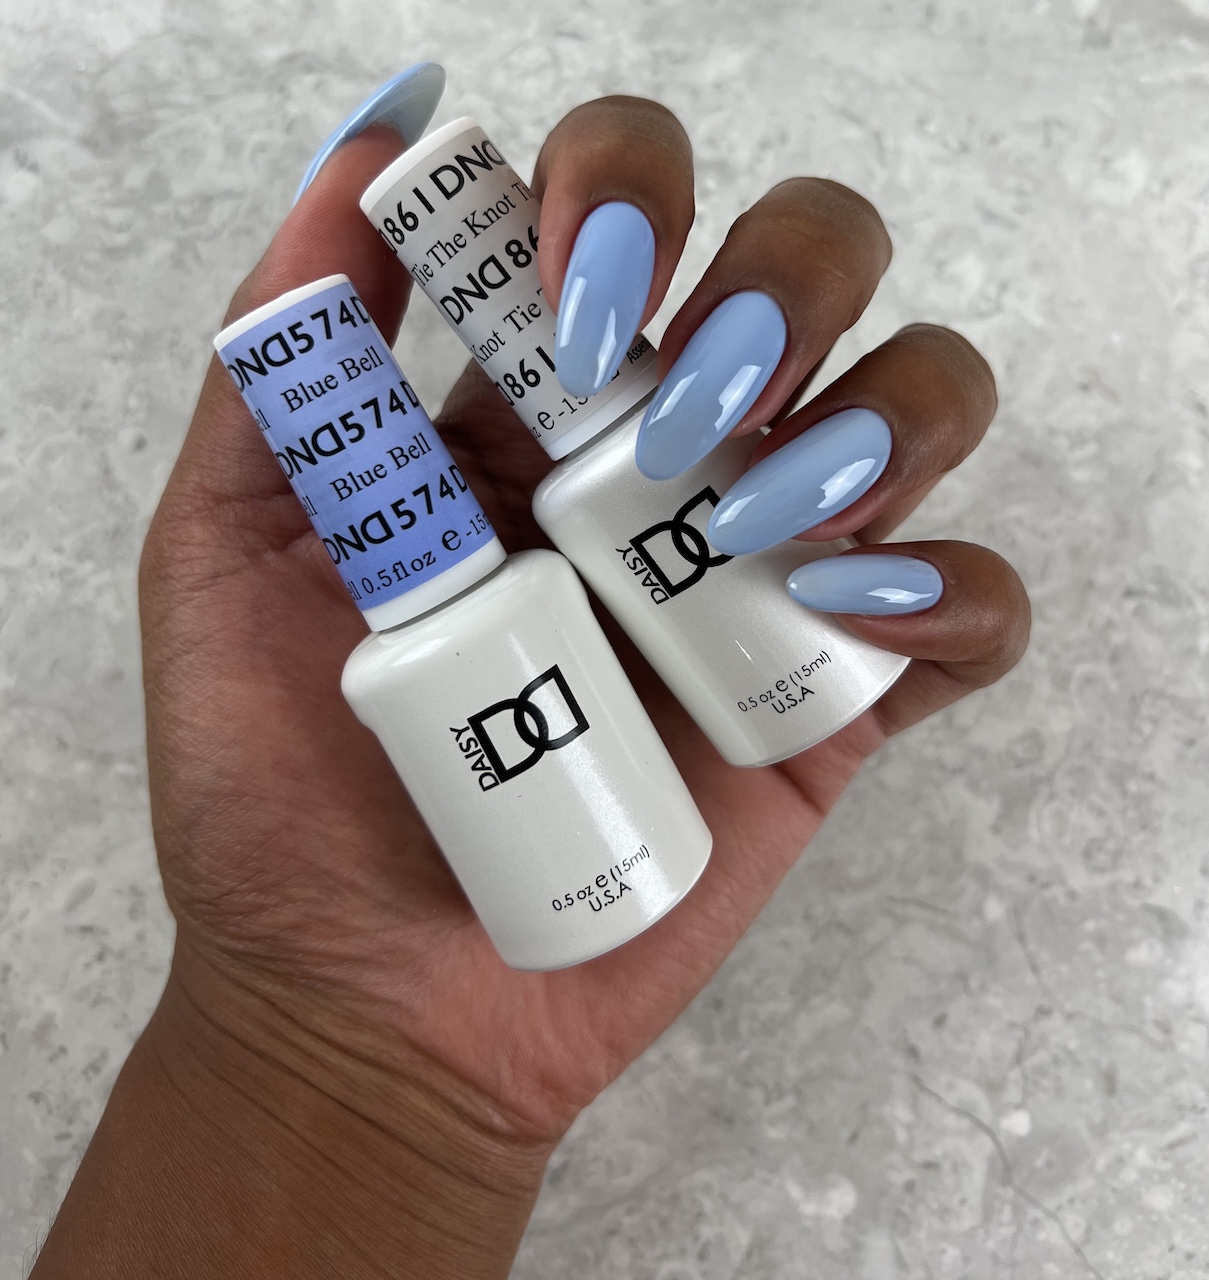 GAOY Gel Nail Polish Kit 3 Colors Jelly Milky White Blue Gray Sheer Soak  Off UV Gel Polish Set - Cloudy Coast